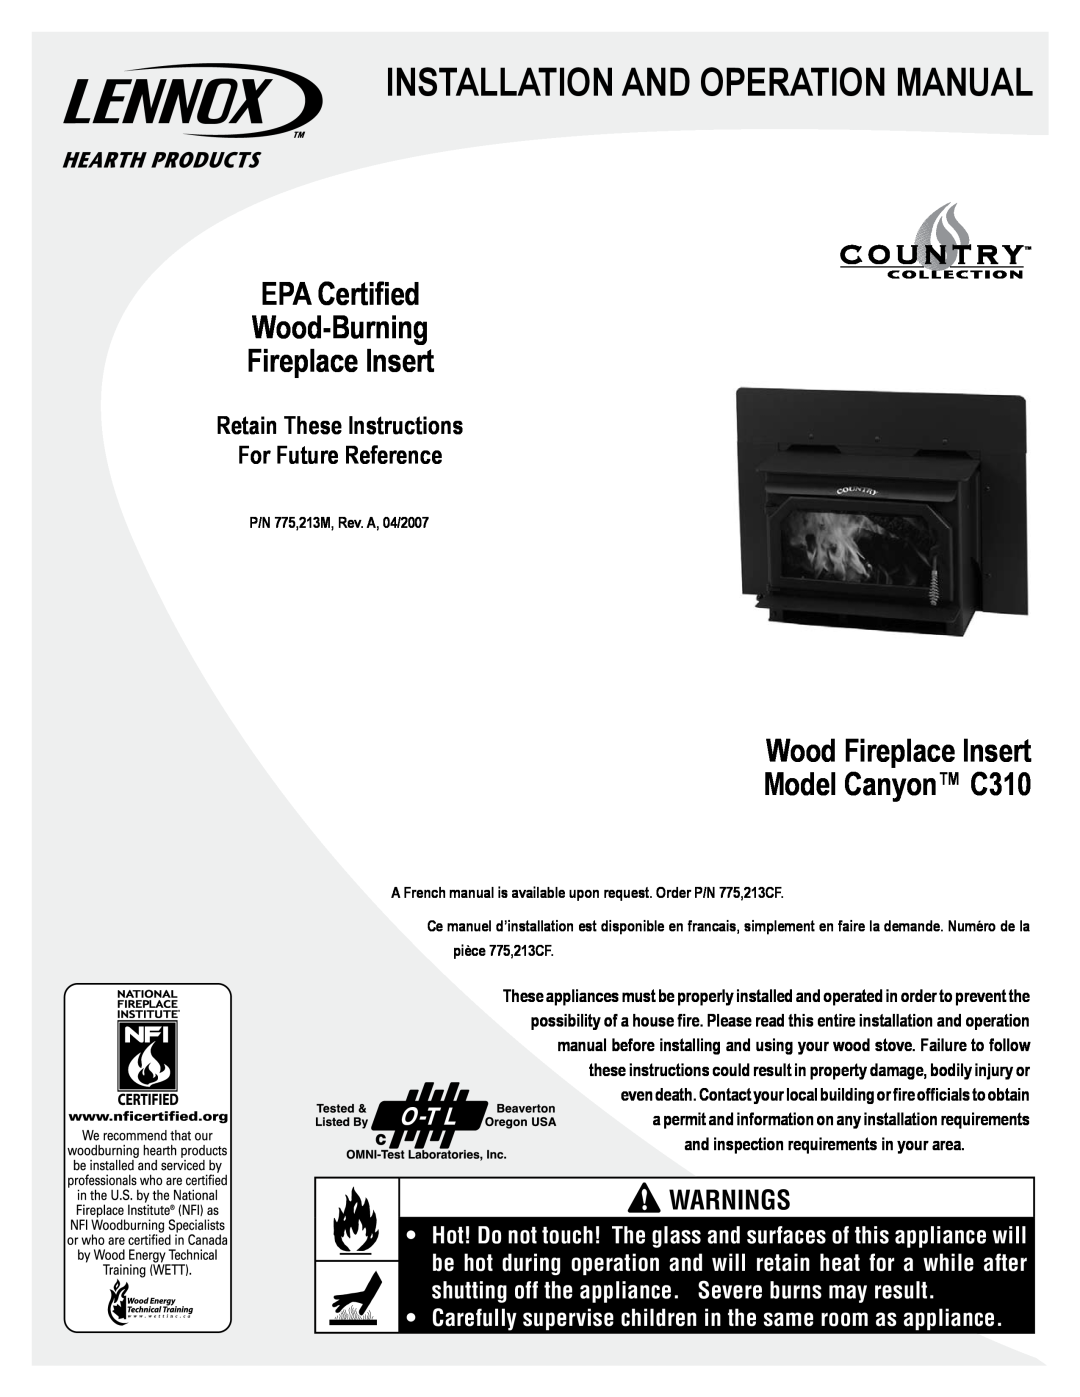 Maytag operation manual EPA Certified Wood-Burning Fireplace Insert, Wood Fireplace Insert Model Canyon C310, Warnings 